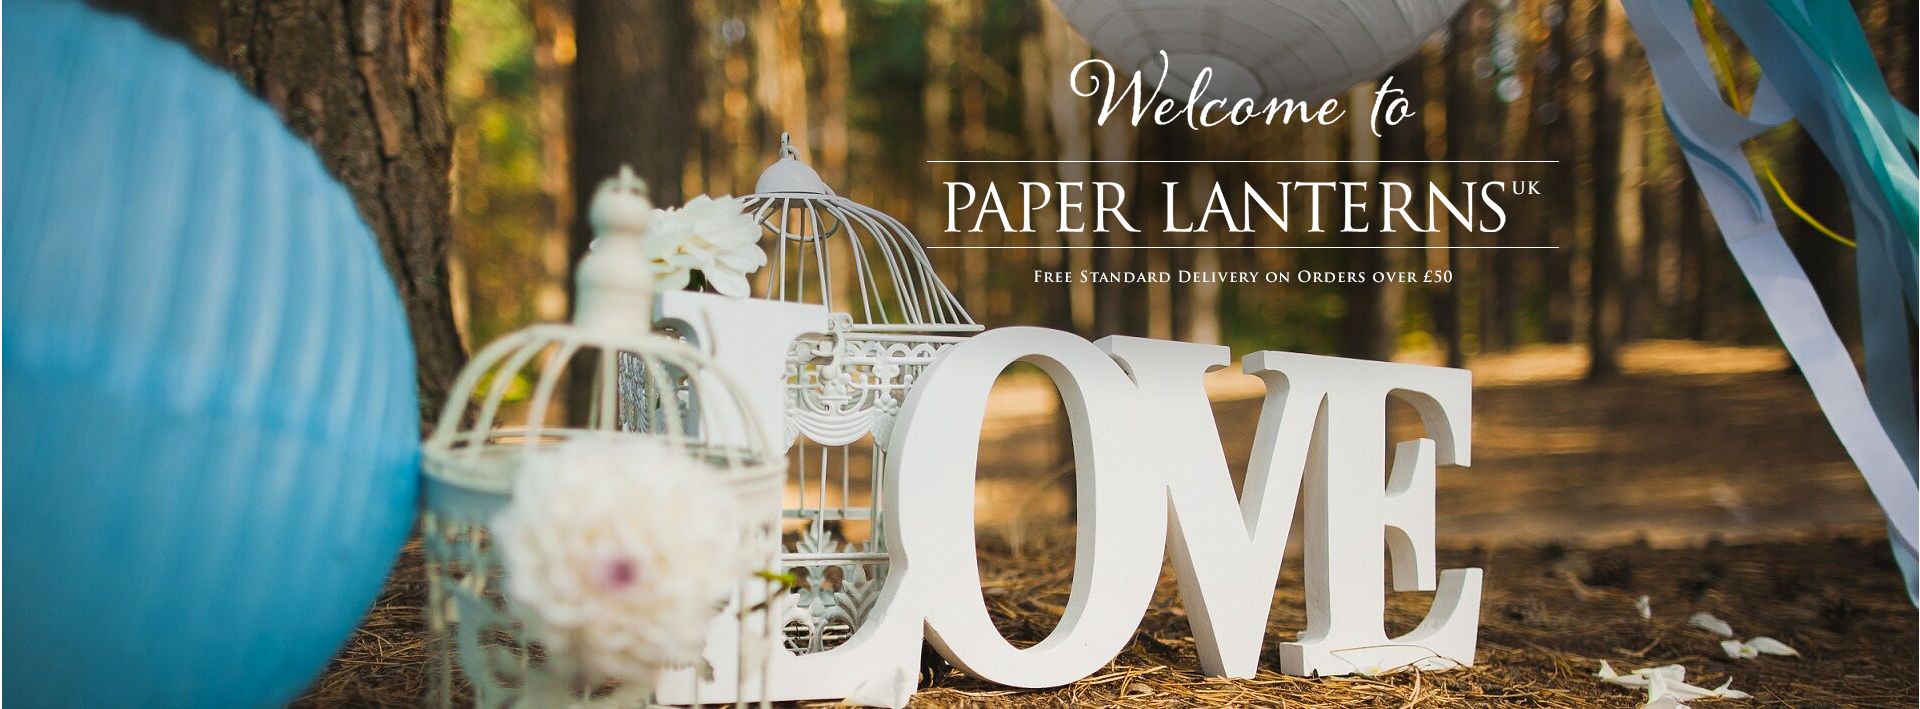 Paper Lanterns for weddings